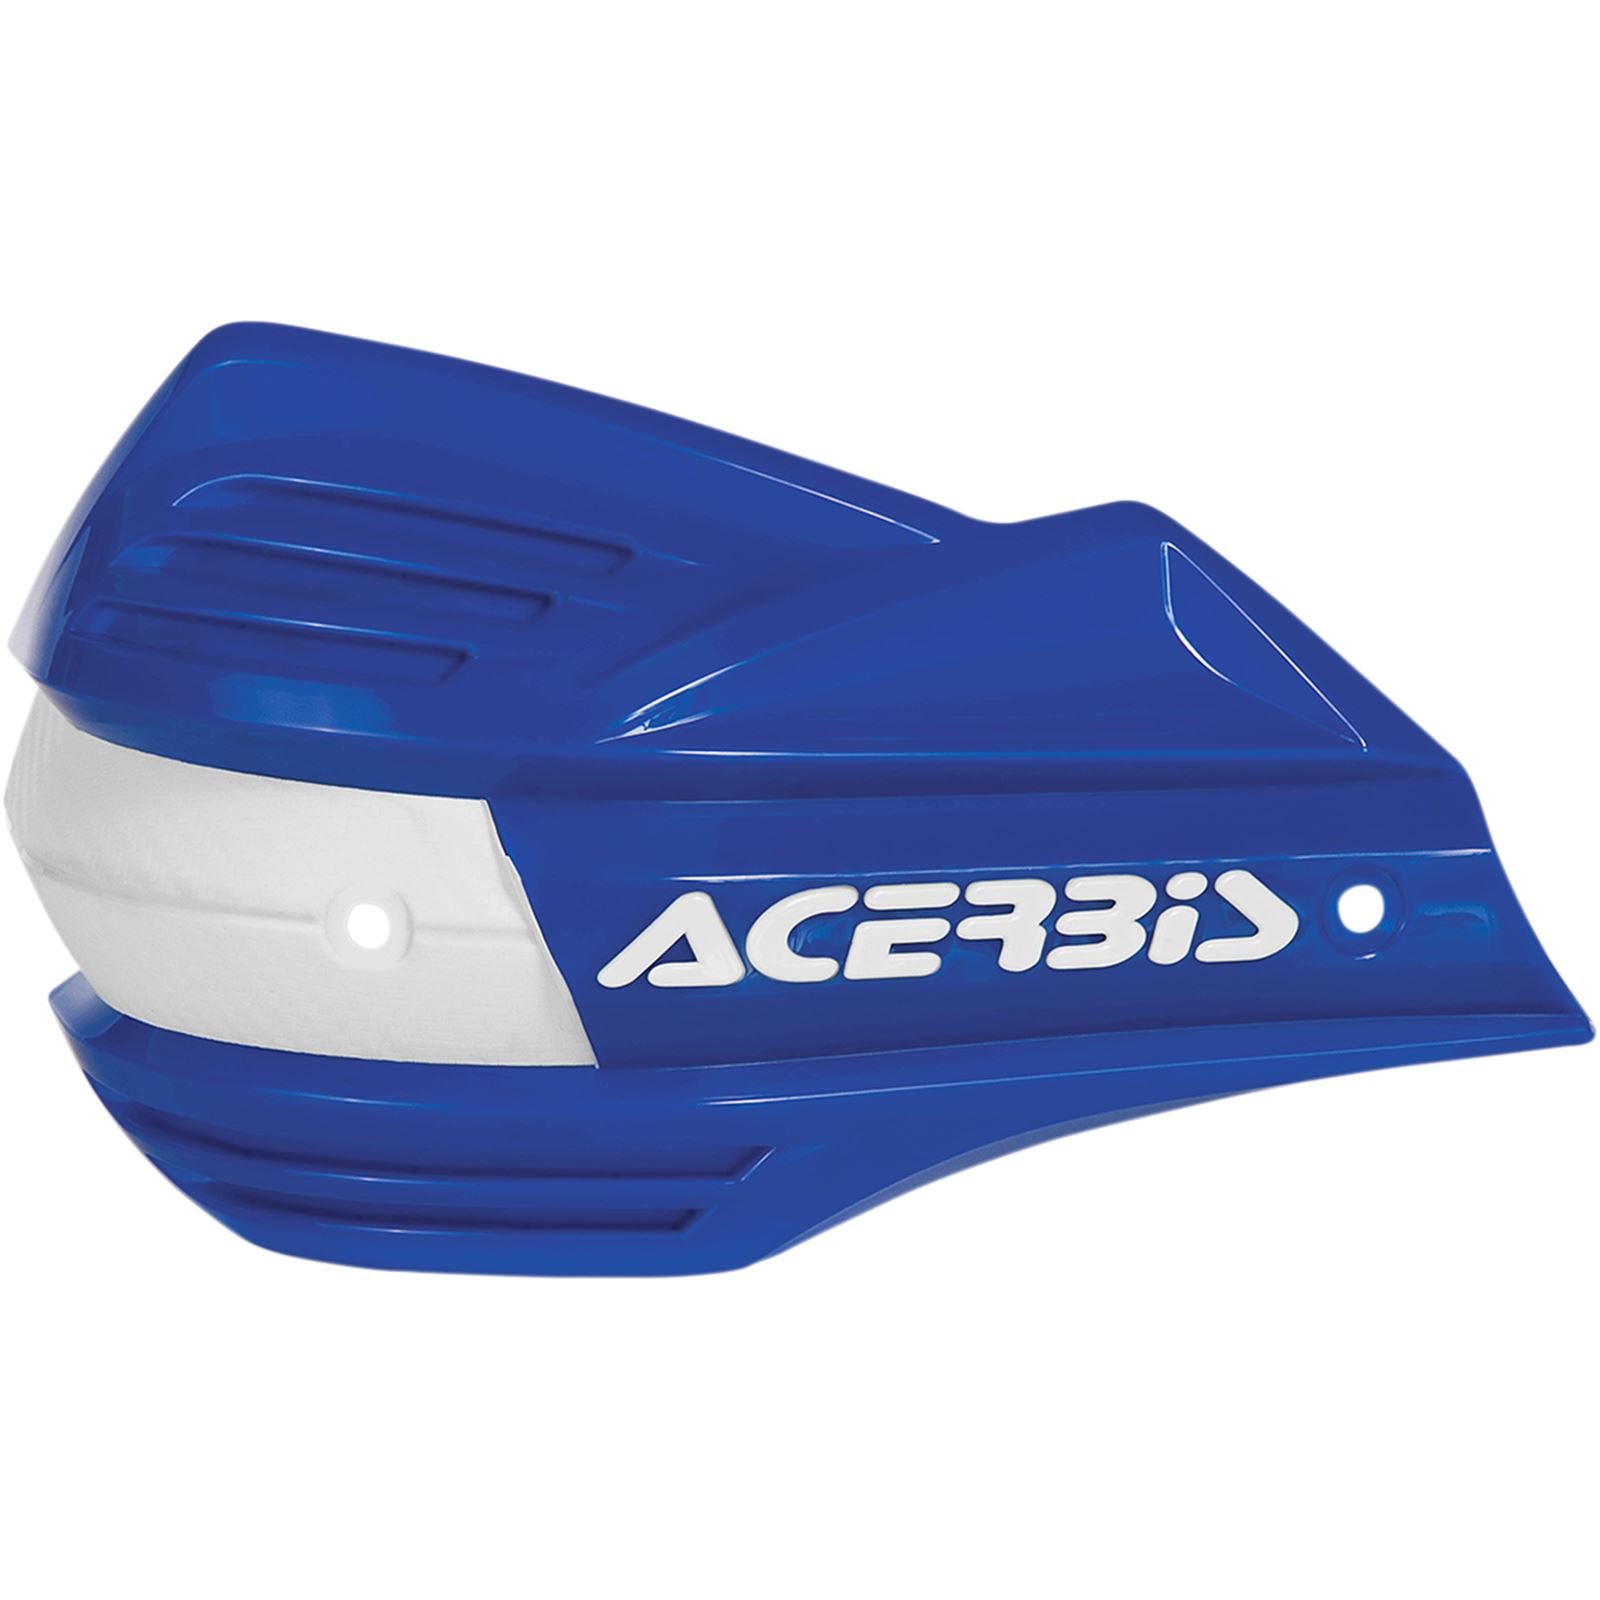 Acerbis Blue X-Factor Handguards